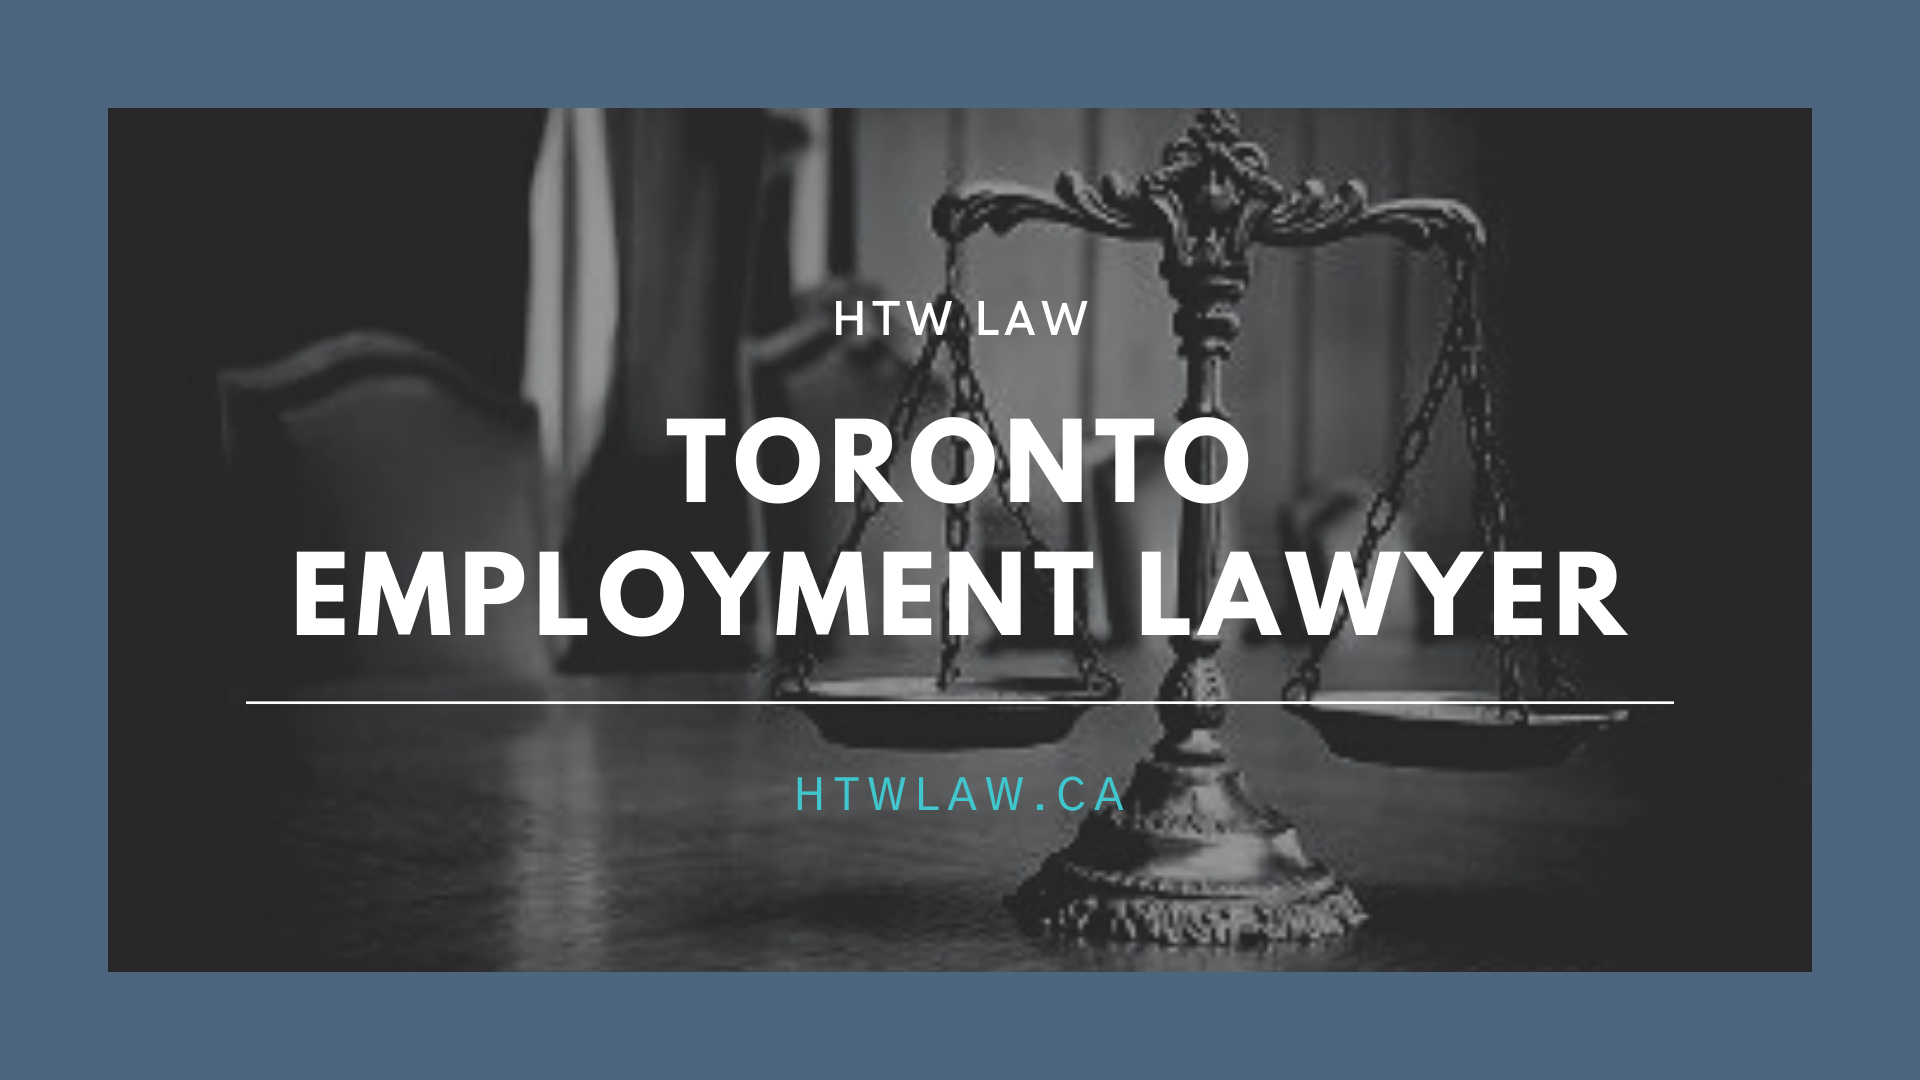 Toronto employment lawyer